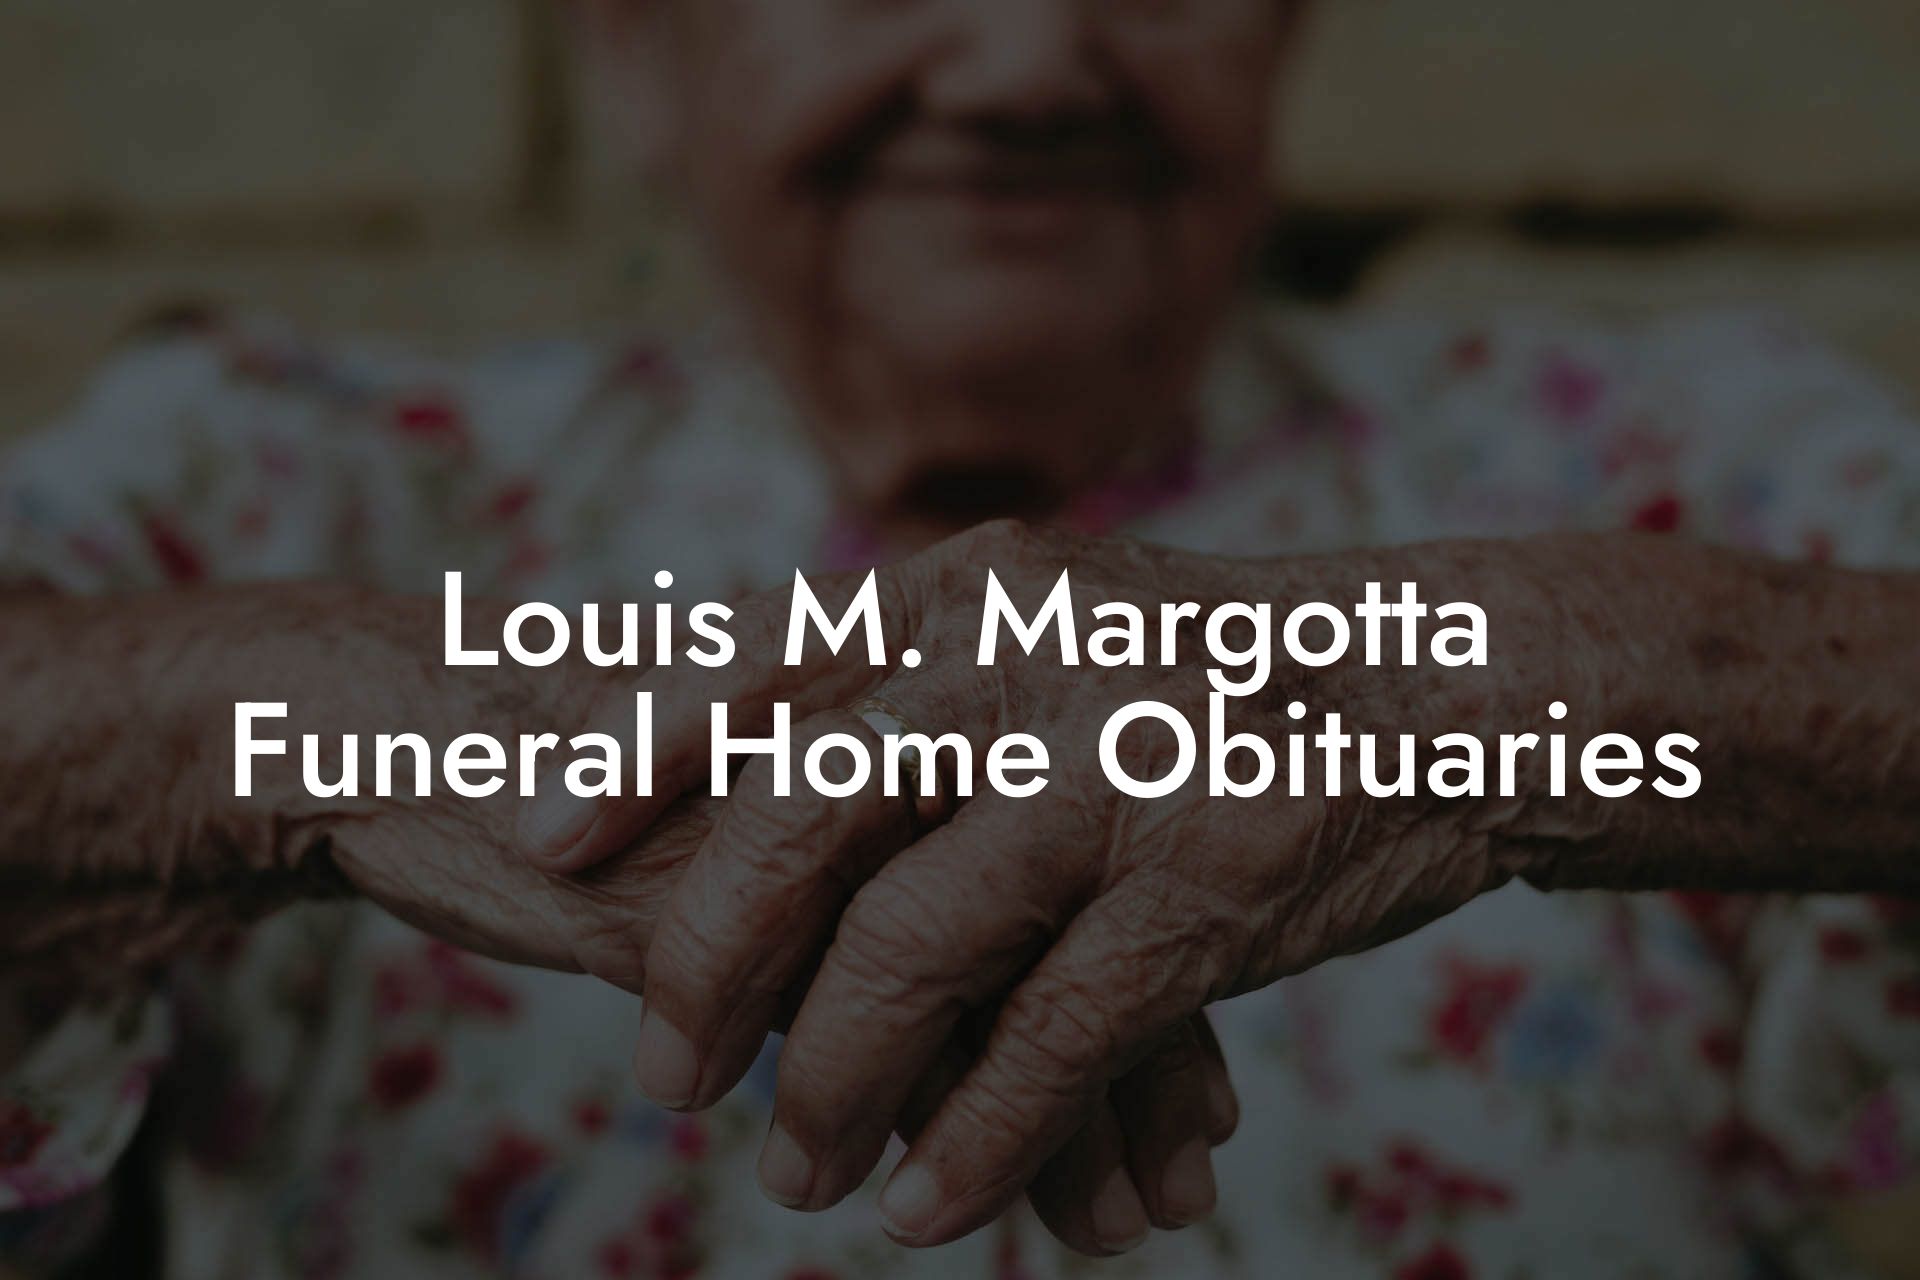 Louis M. Margotta Funeral Home Obituaries